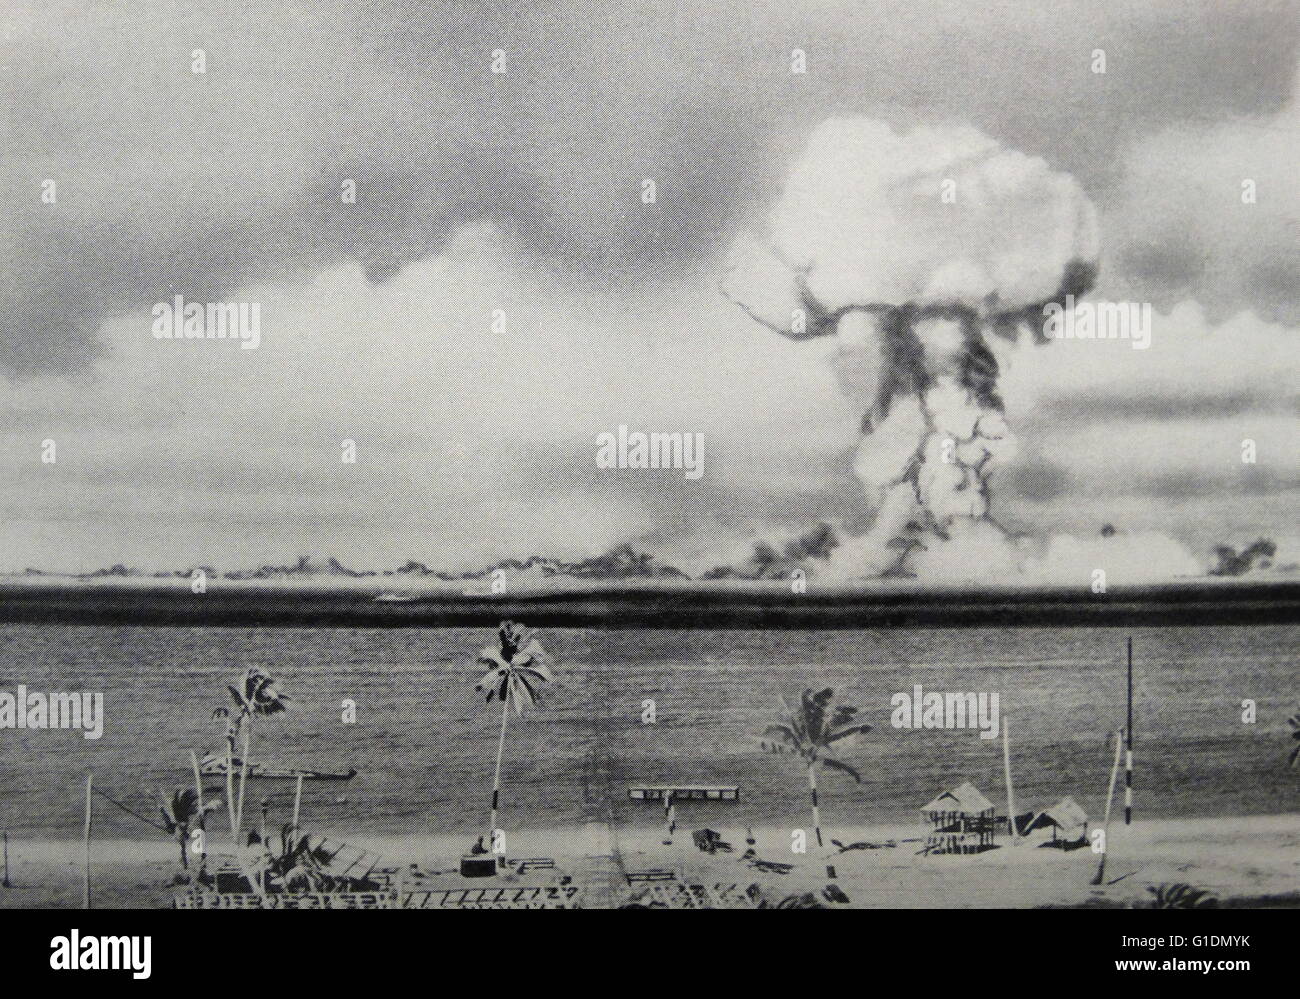 Atomtest bikini atoll -Fotos und -Bildmaterial in hoher Auflösung – Alamy